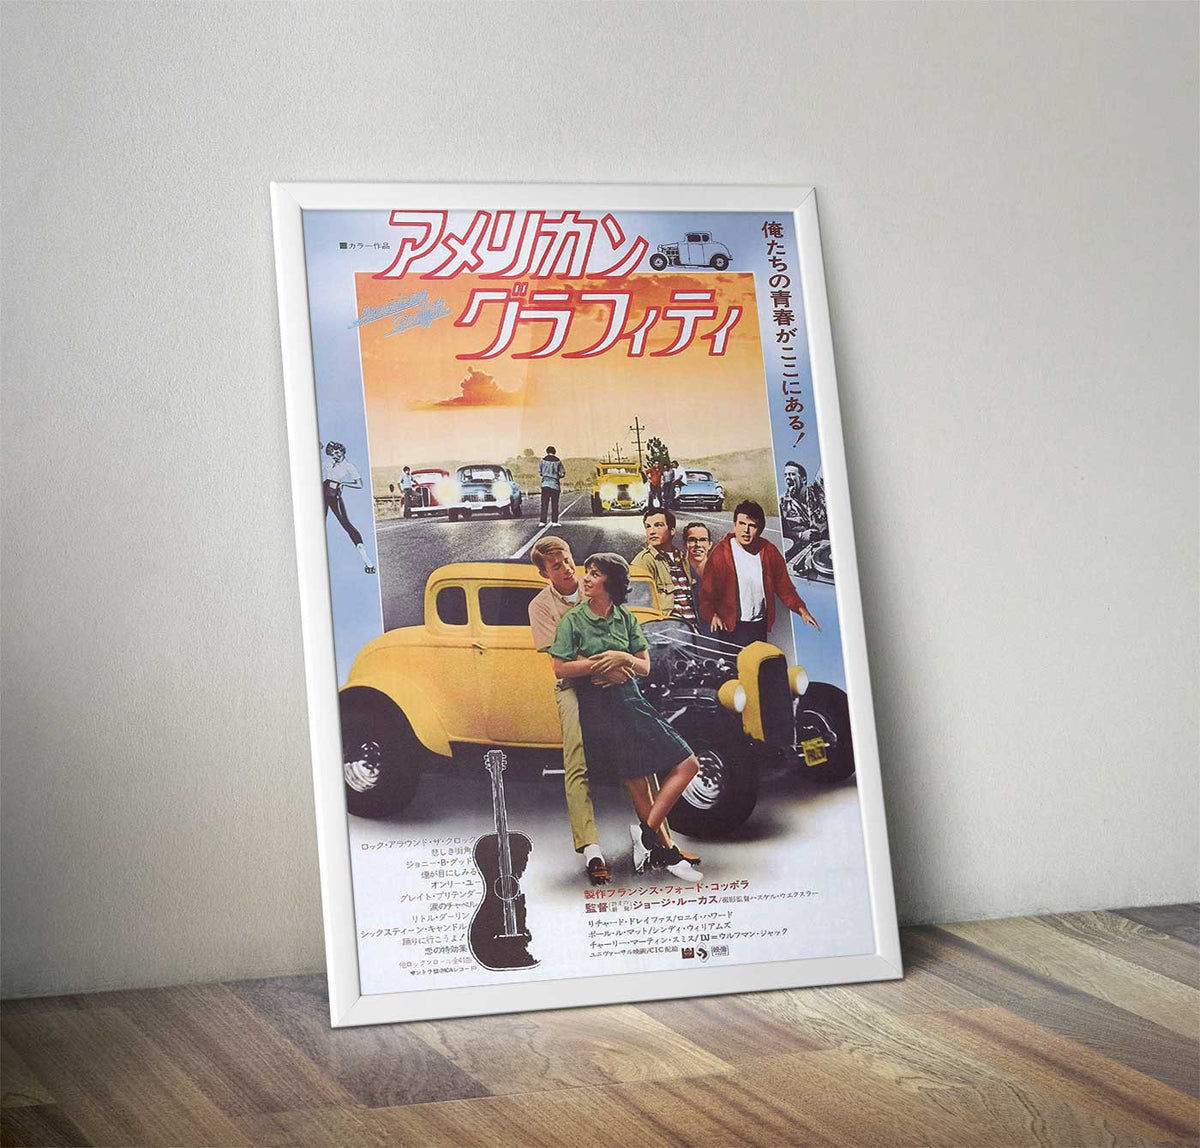 American Graffiti Japanese Release Poster - Steeltown Garage